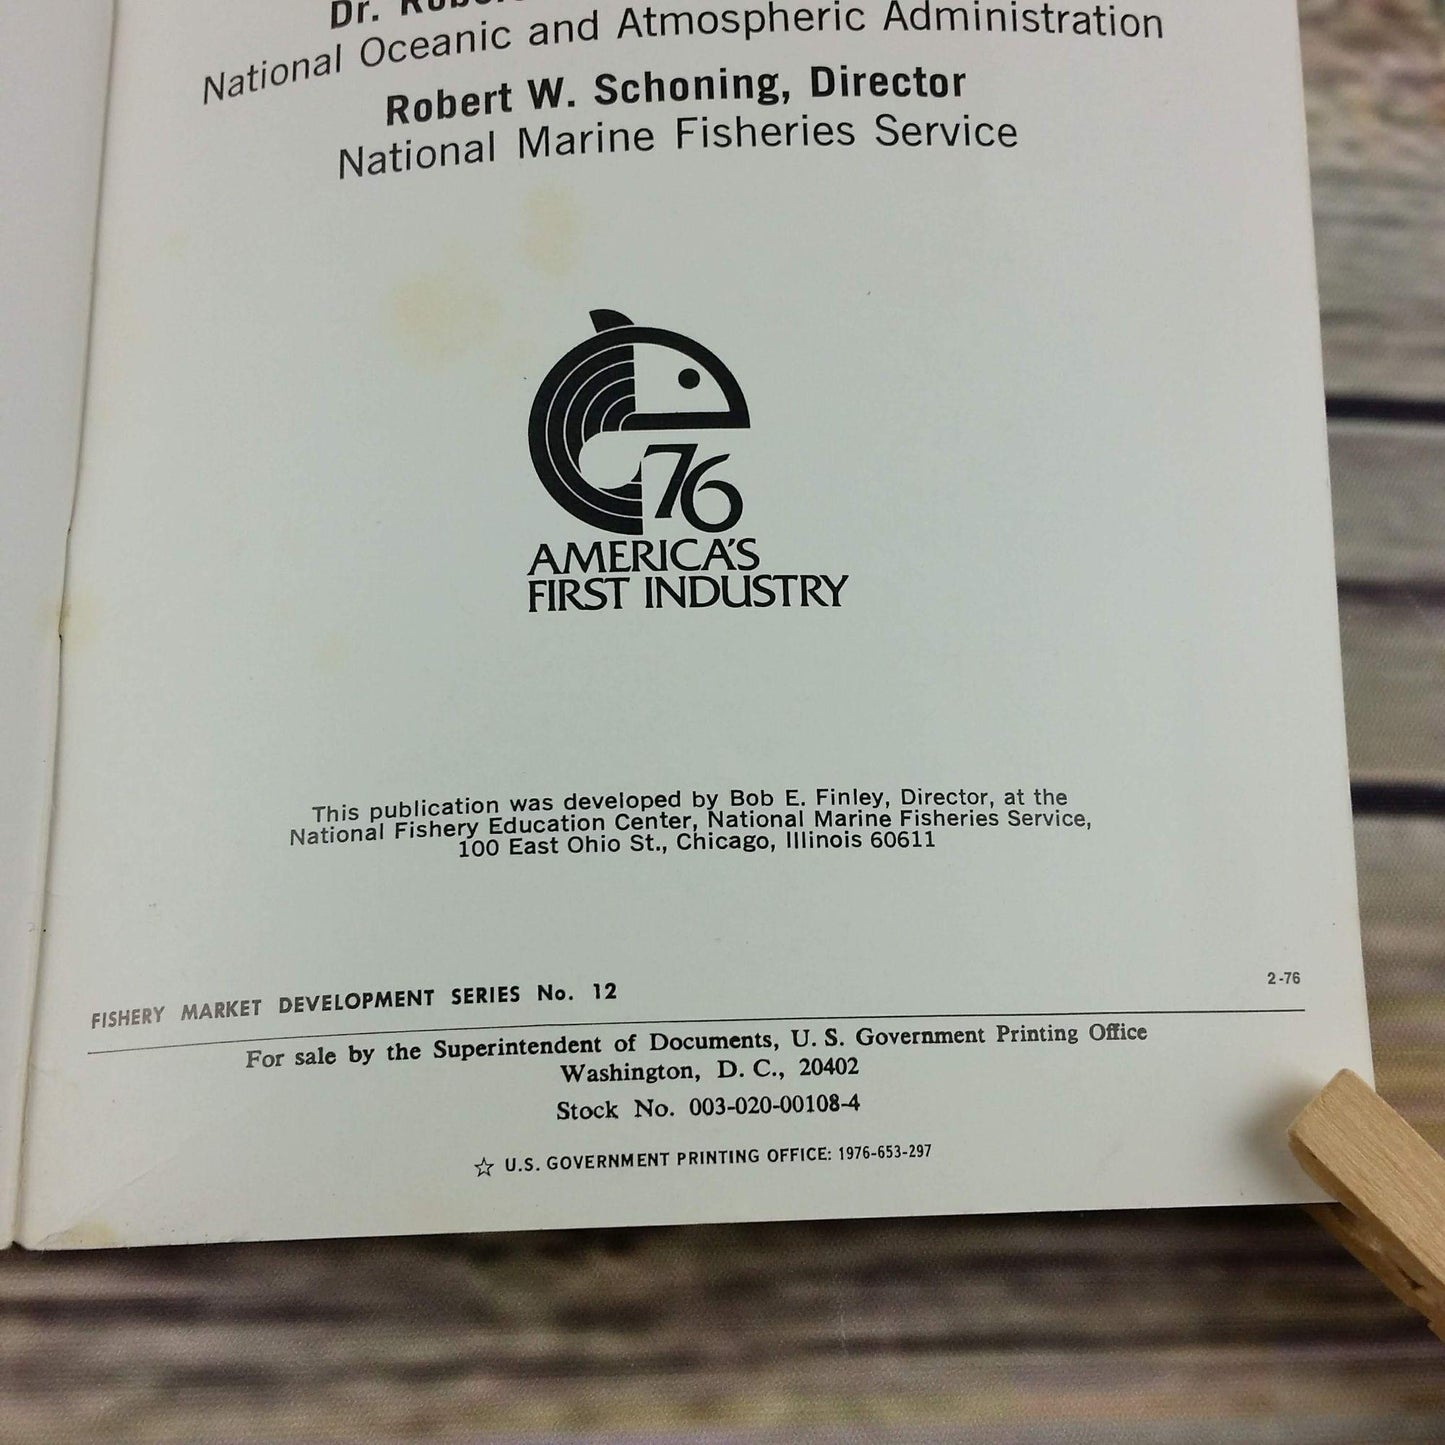 Vintage Cookbook Time for Seafood Recipes 1976 NOAA Dept of Commerce Fishery Paperback Booklet